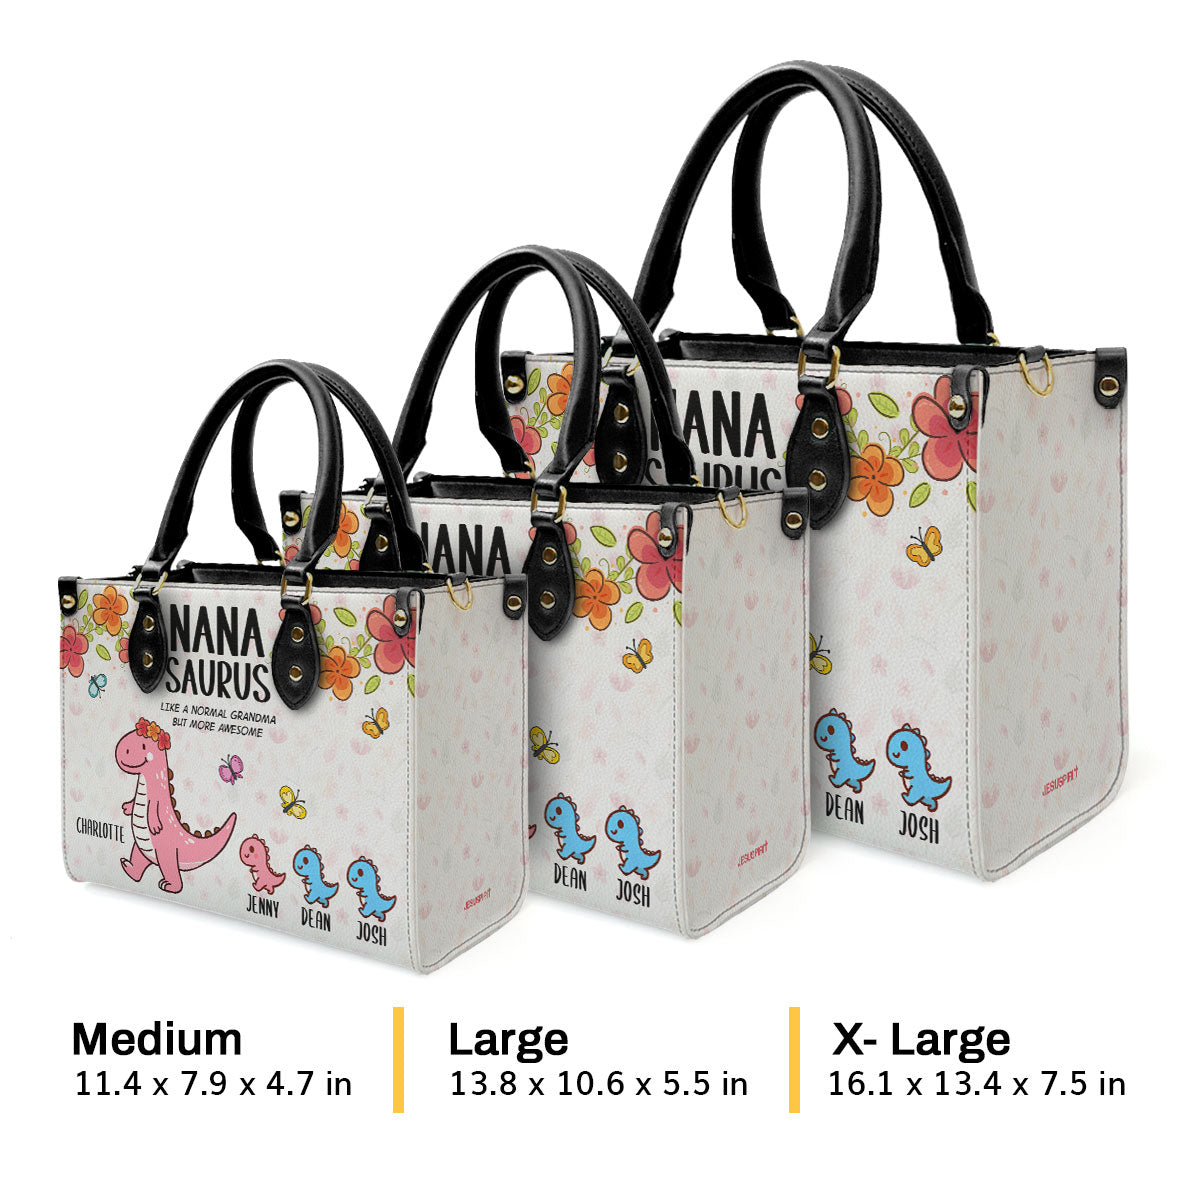 Nanasaurus | Personalized Leather Handbag With Zipper LHBHN03